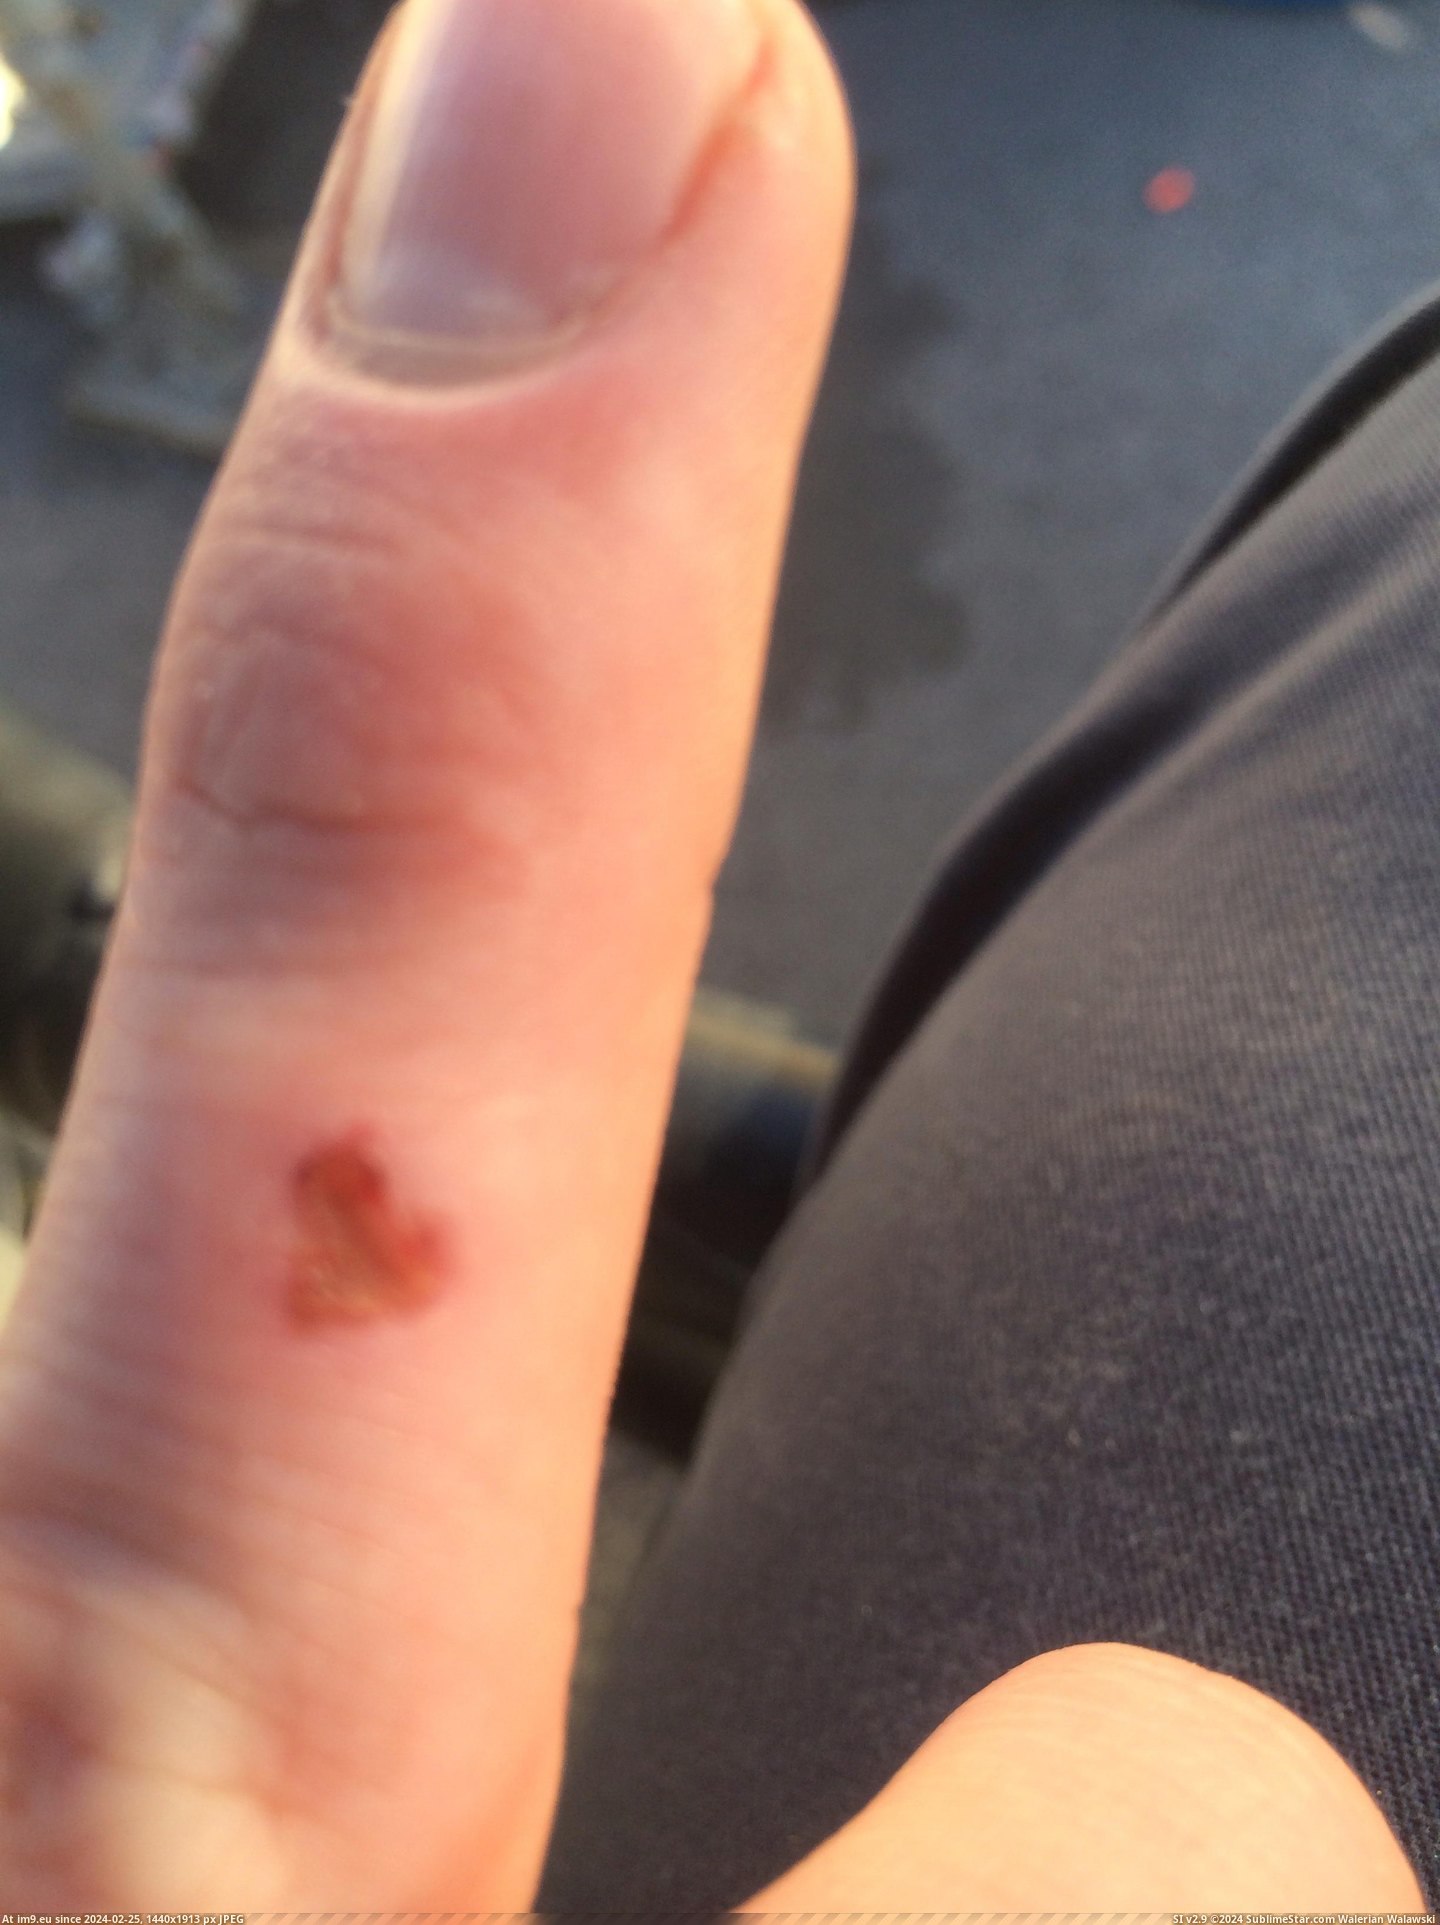 #Finger #Kind #Scab #Heart [Mildlyinteresting] My finger scab looks kind of like a heart. Pic. (Bild von album My r/MILDLYINTERESTING favs))